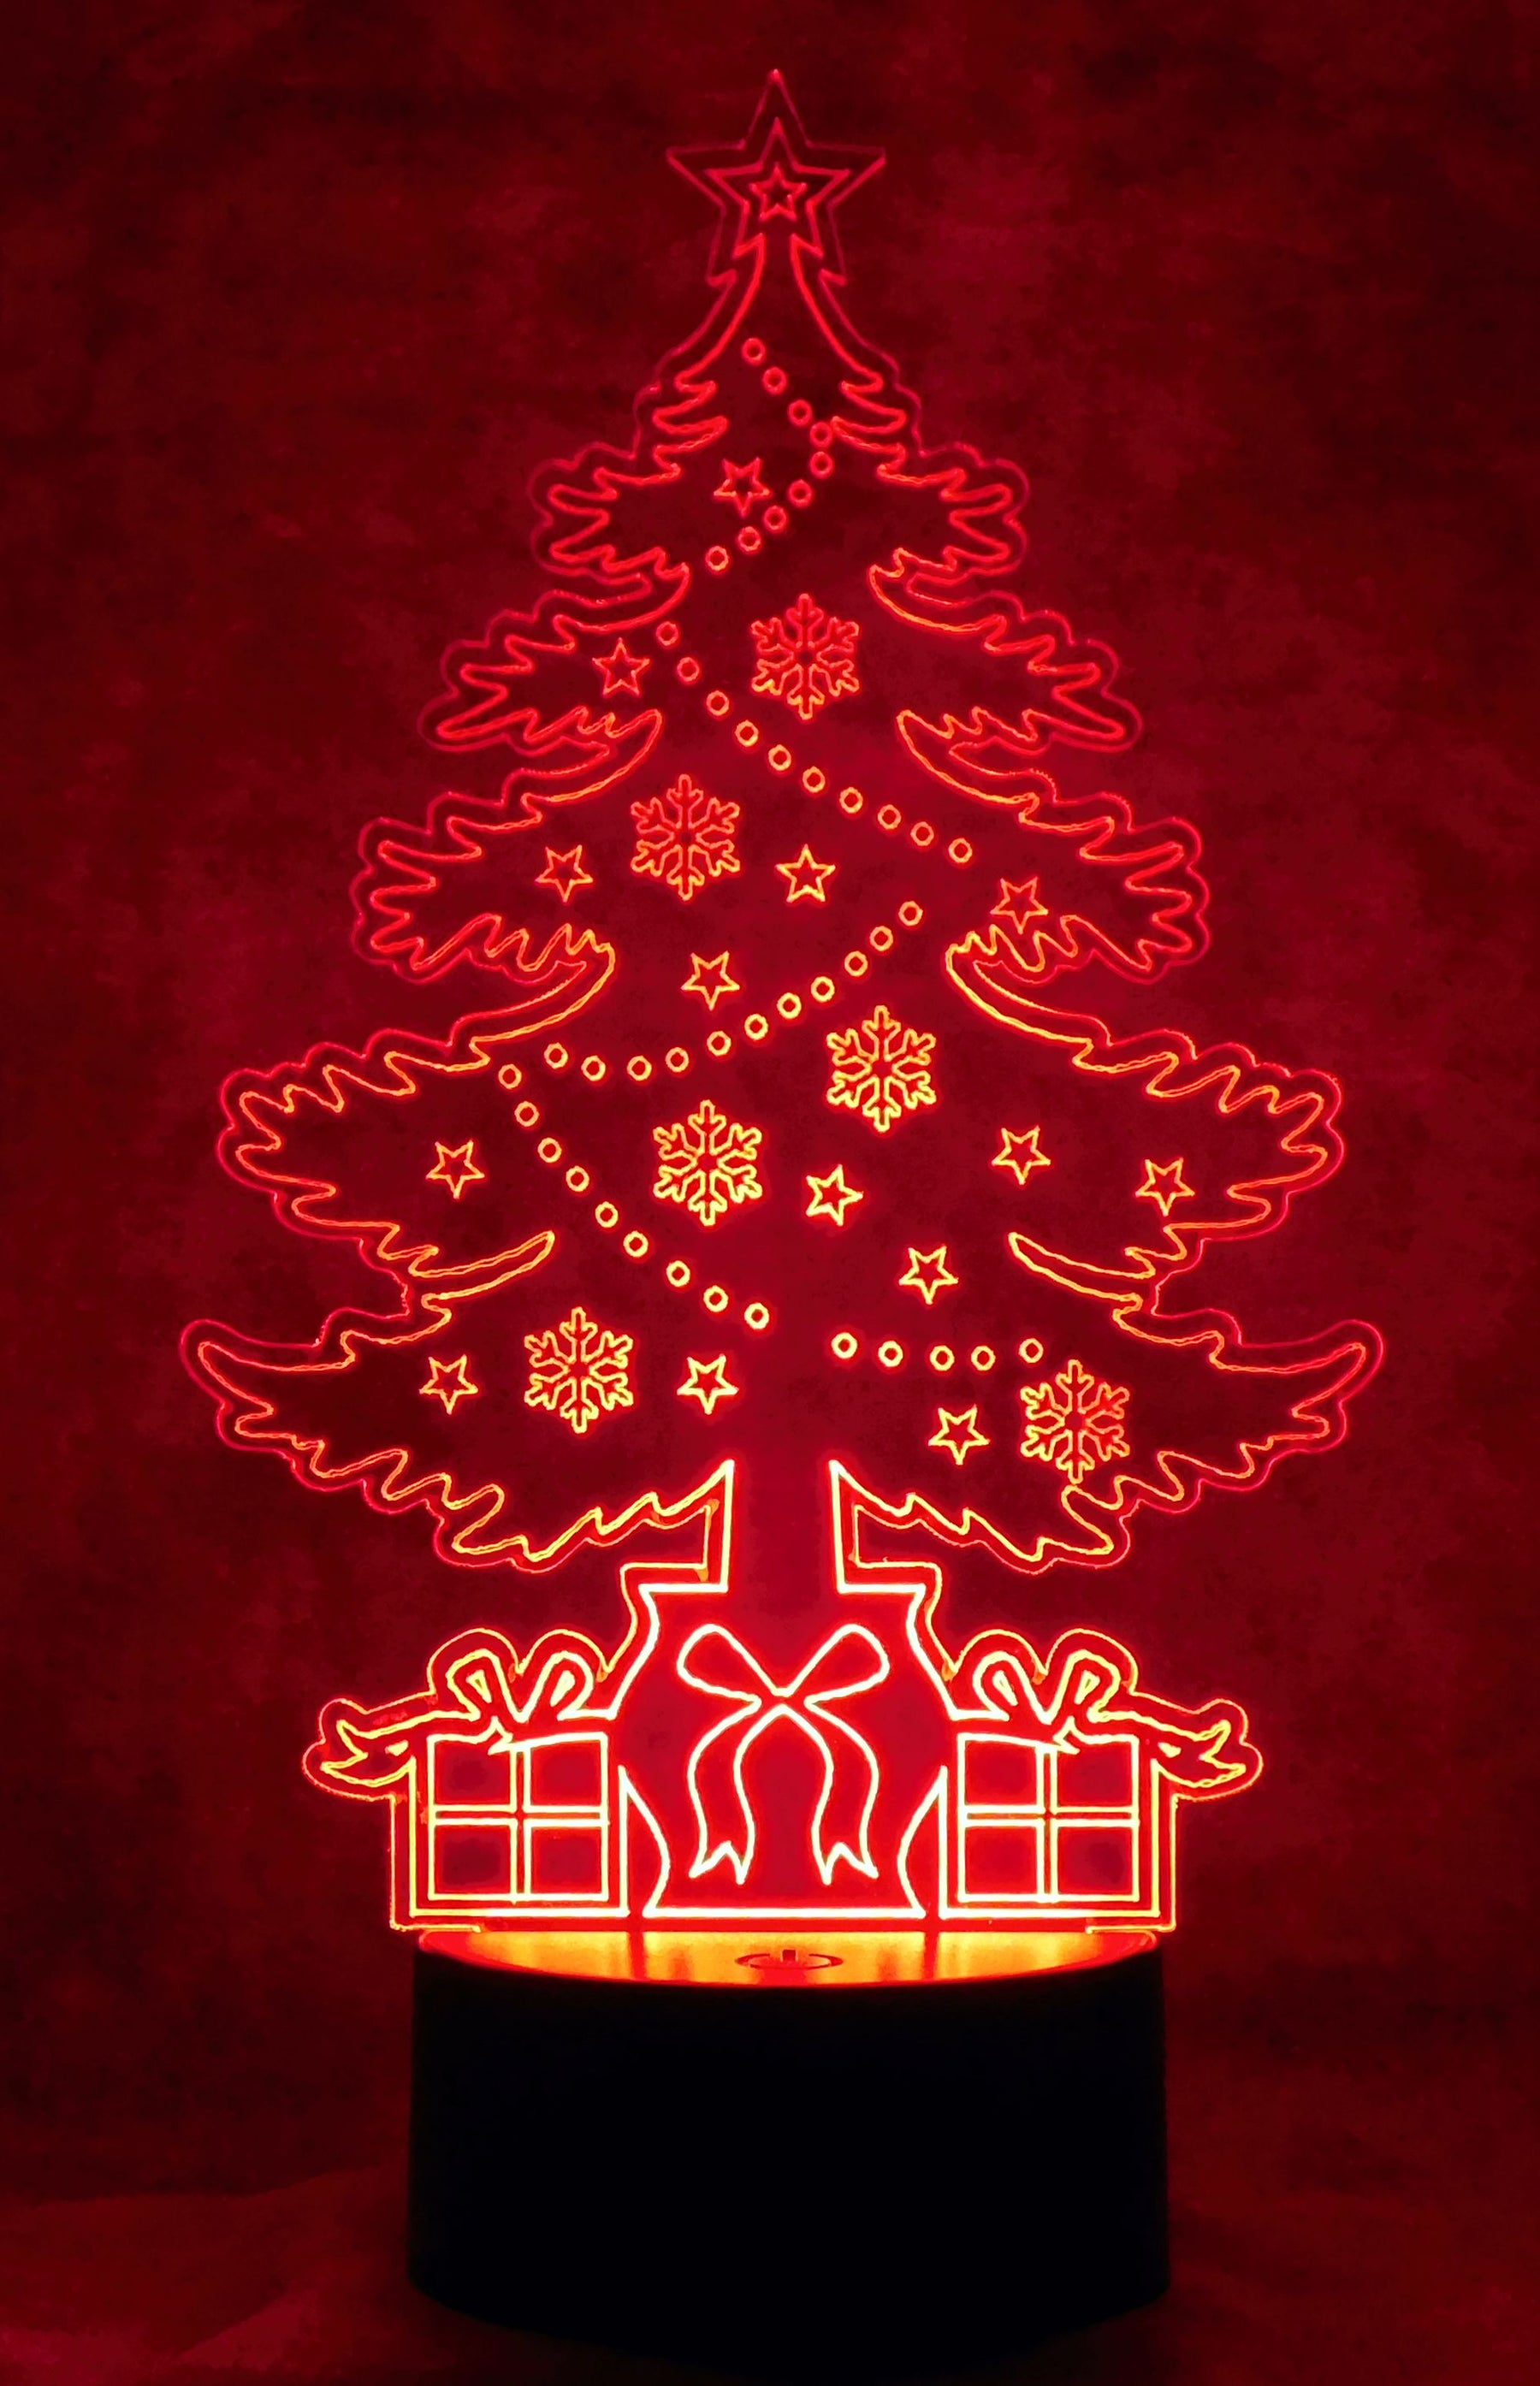 Christmas Tree Presents 3-D Optical Illusion Multicolored Lamp